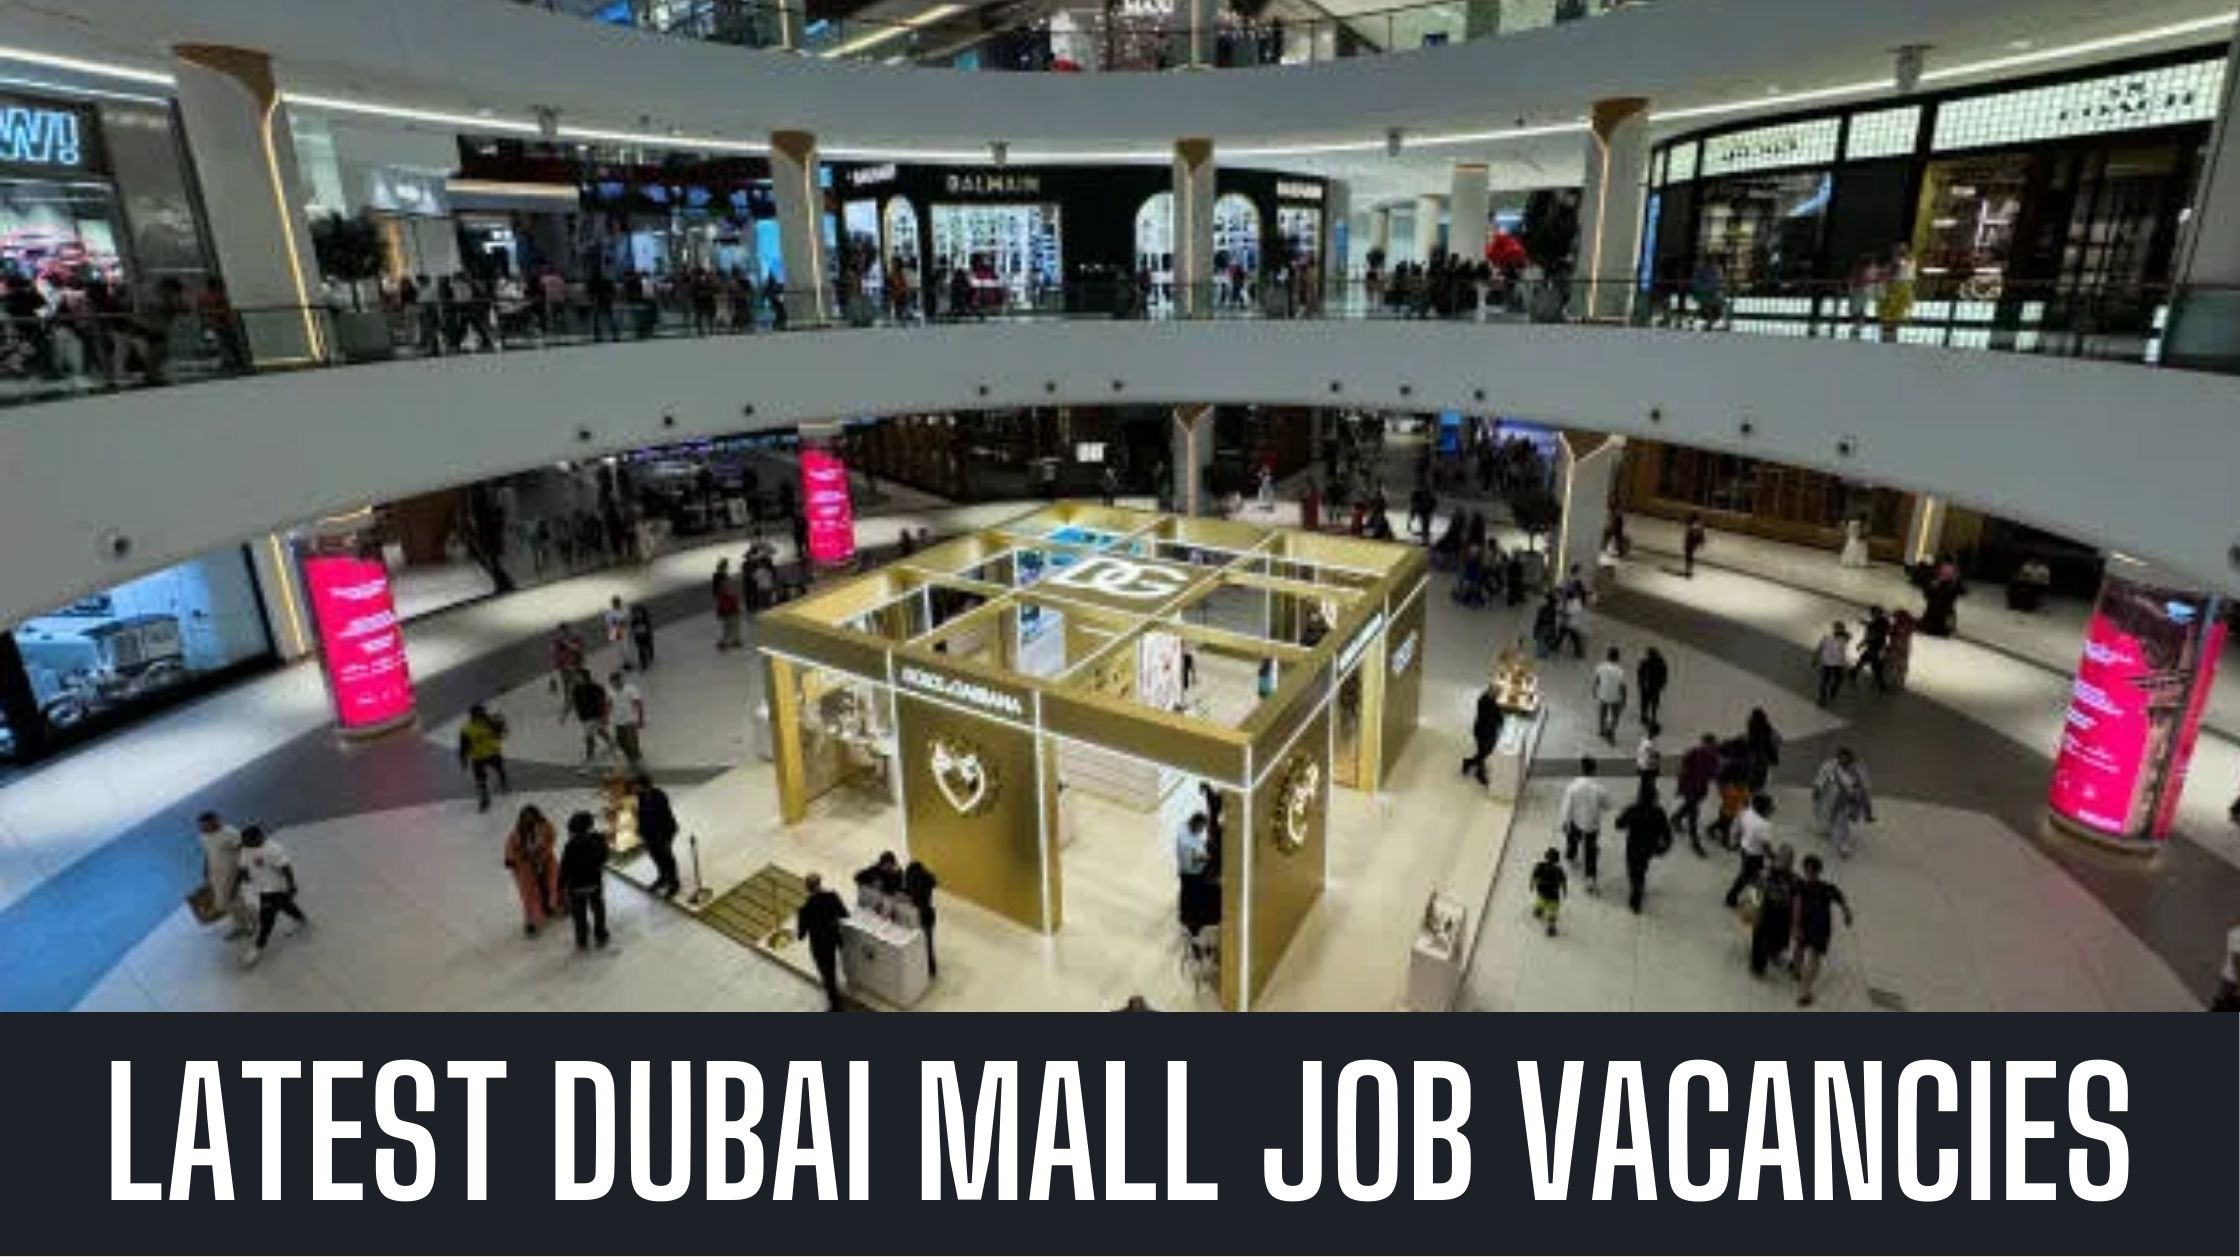 Dubai Mall Announced Vacancies in Dubai Latest Updates Apply Now